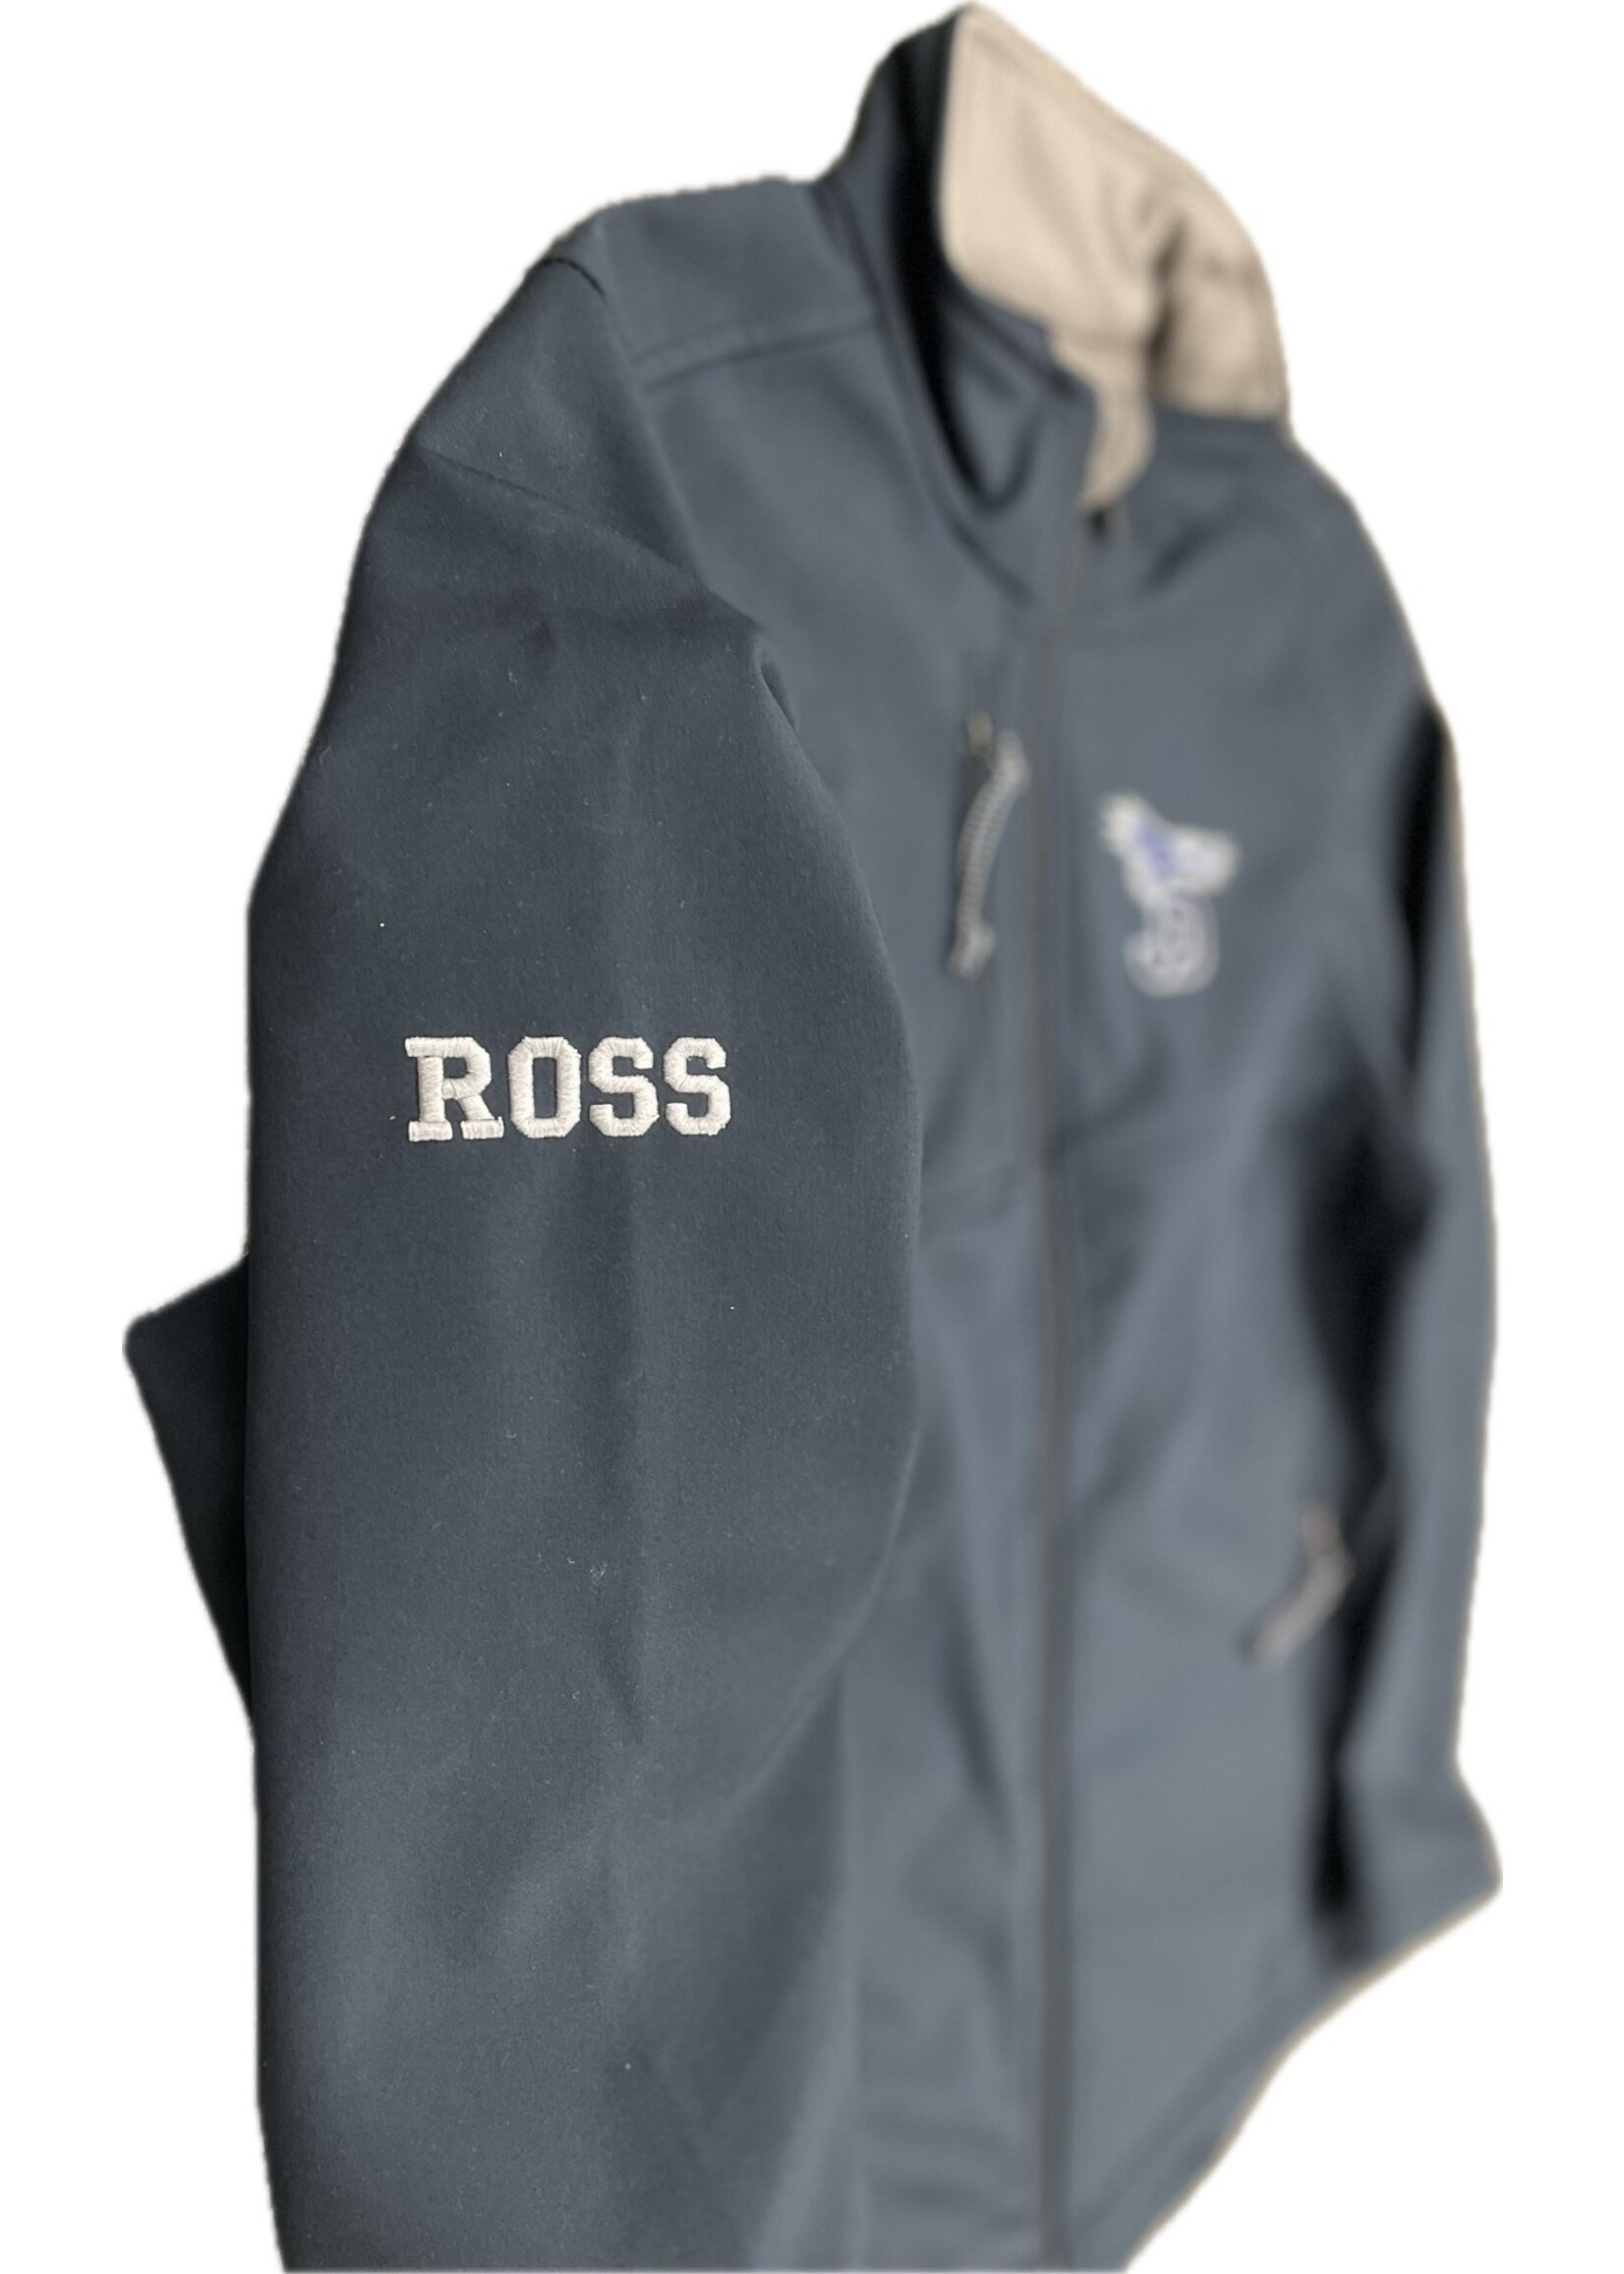 NON-UNIFORM Lacrosse Soft Shell Jacket, custom